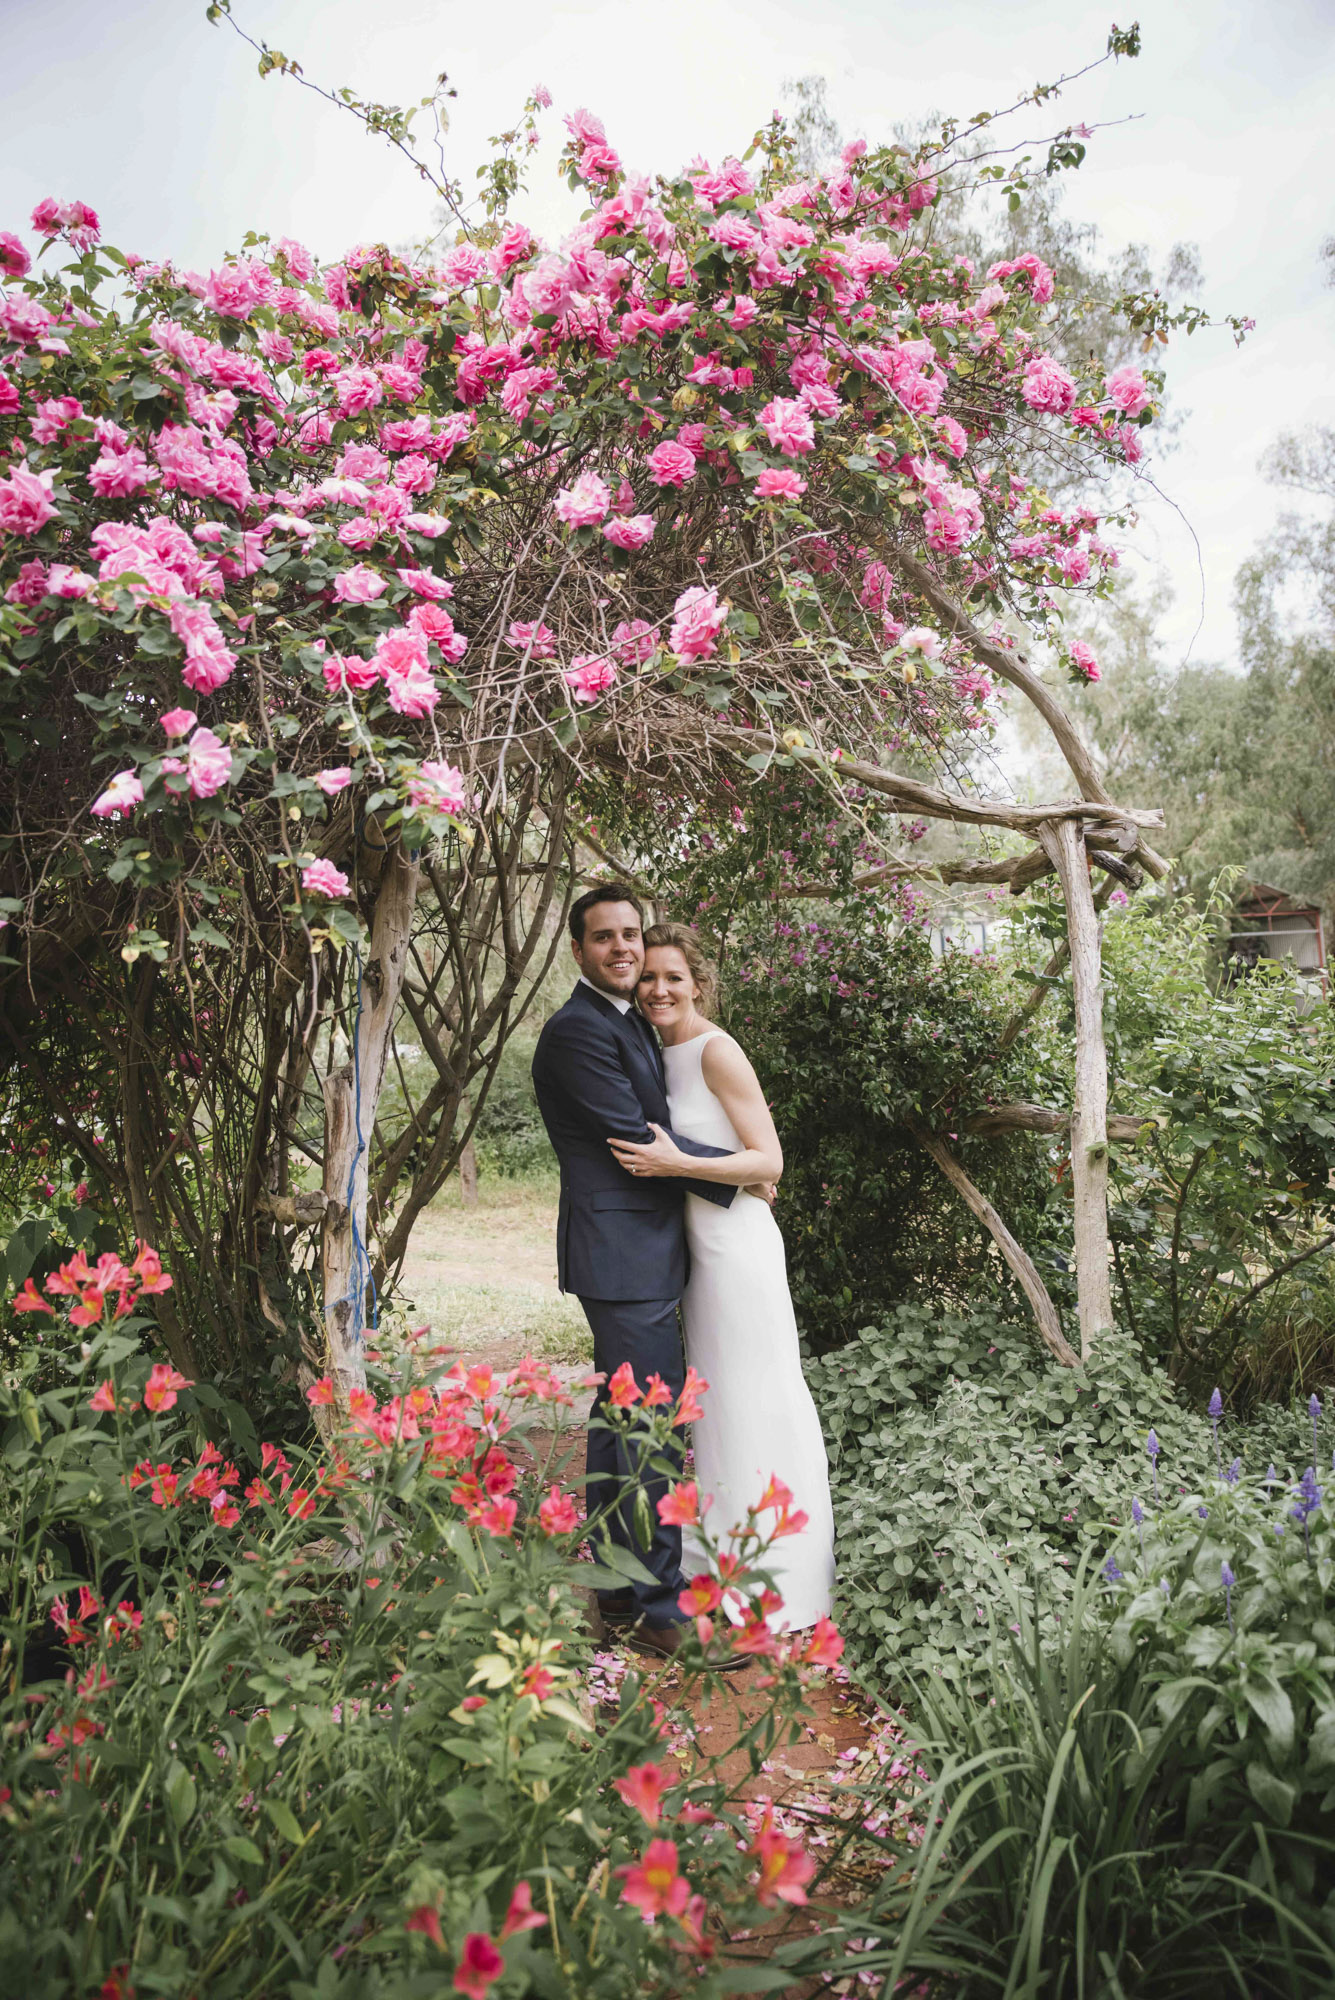 Angie-Roe-Photography-Wedding-Perth-Northam-Wheatbelt-Country-Rural (8).jpg